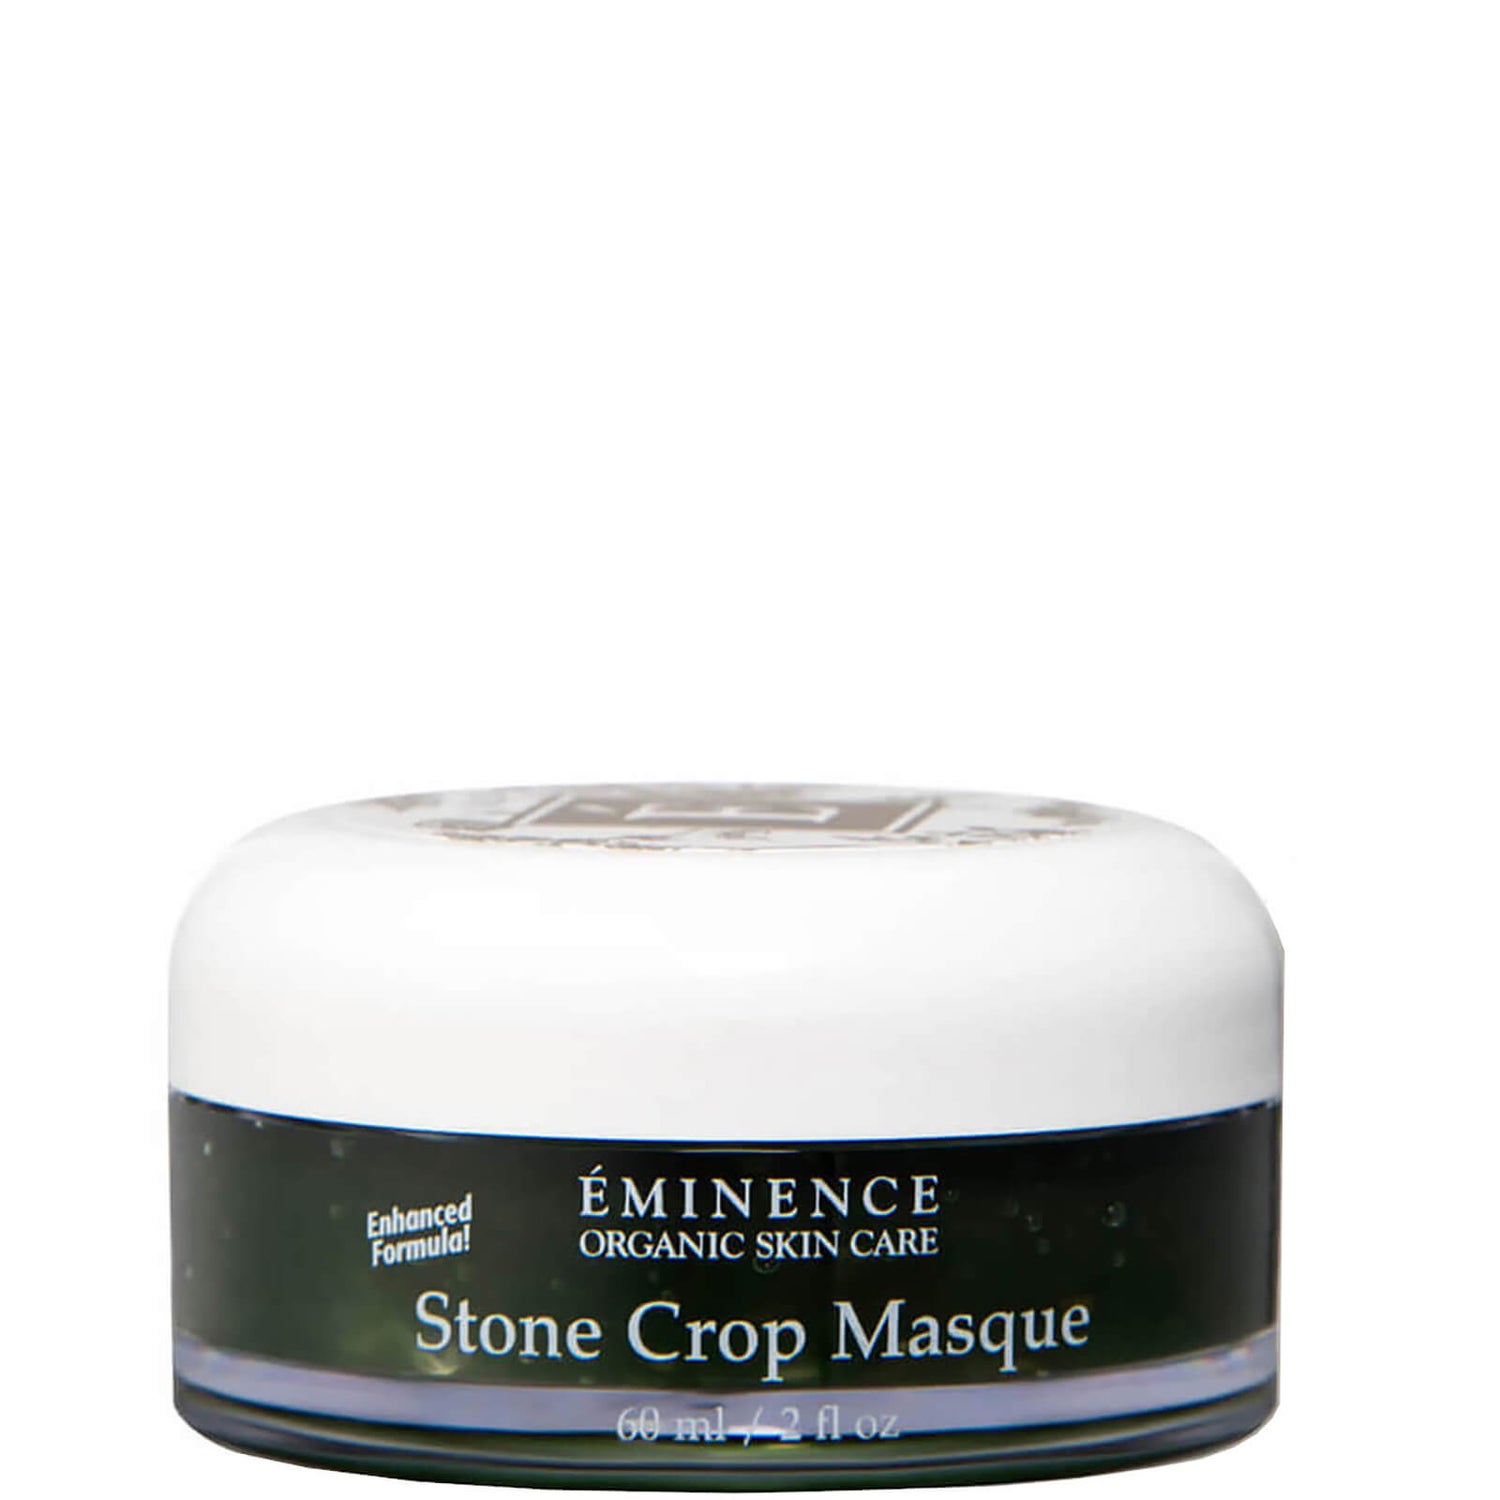 Eminence Organic Skin Care Stone Crop Masque 2 fl. oz